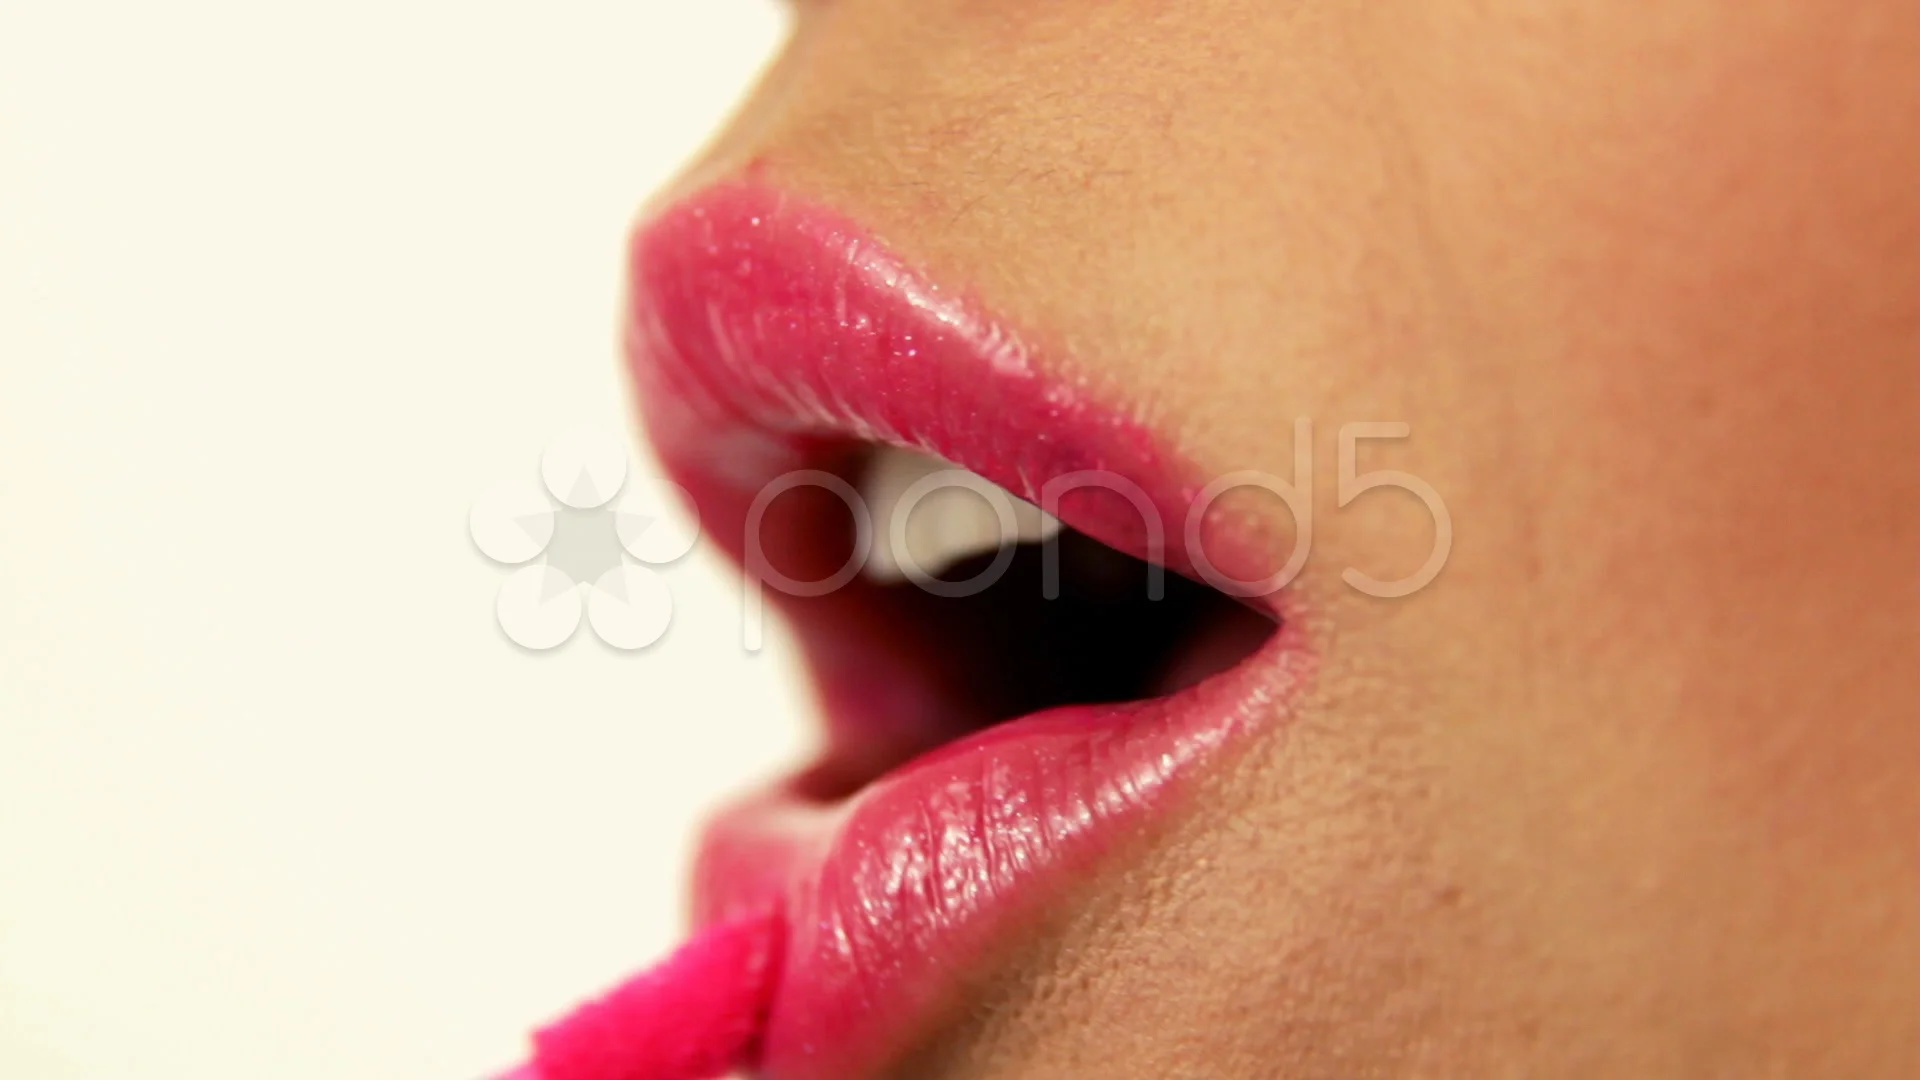 applying pink lipstick